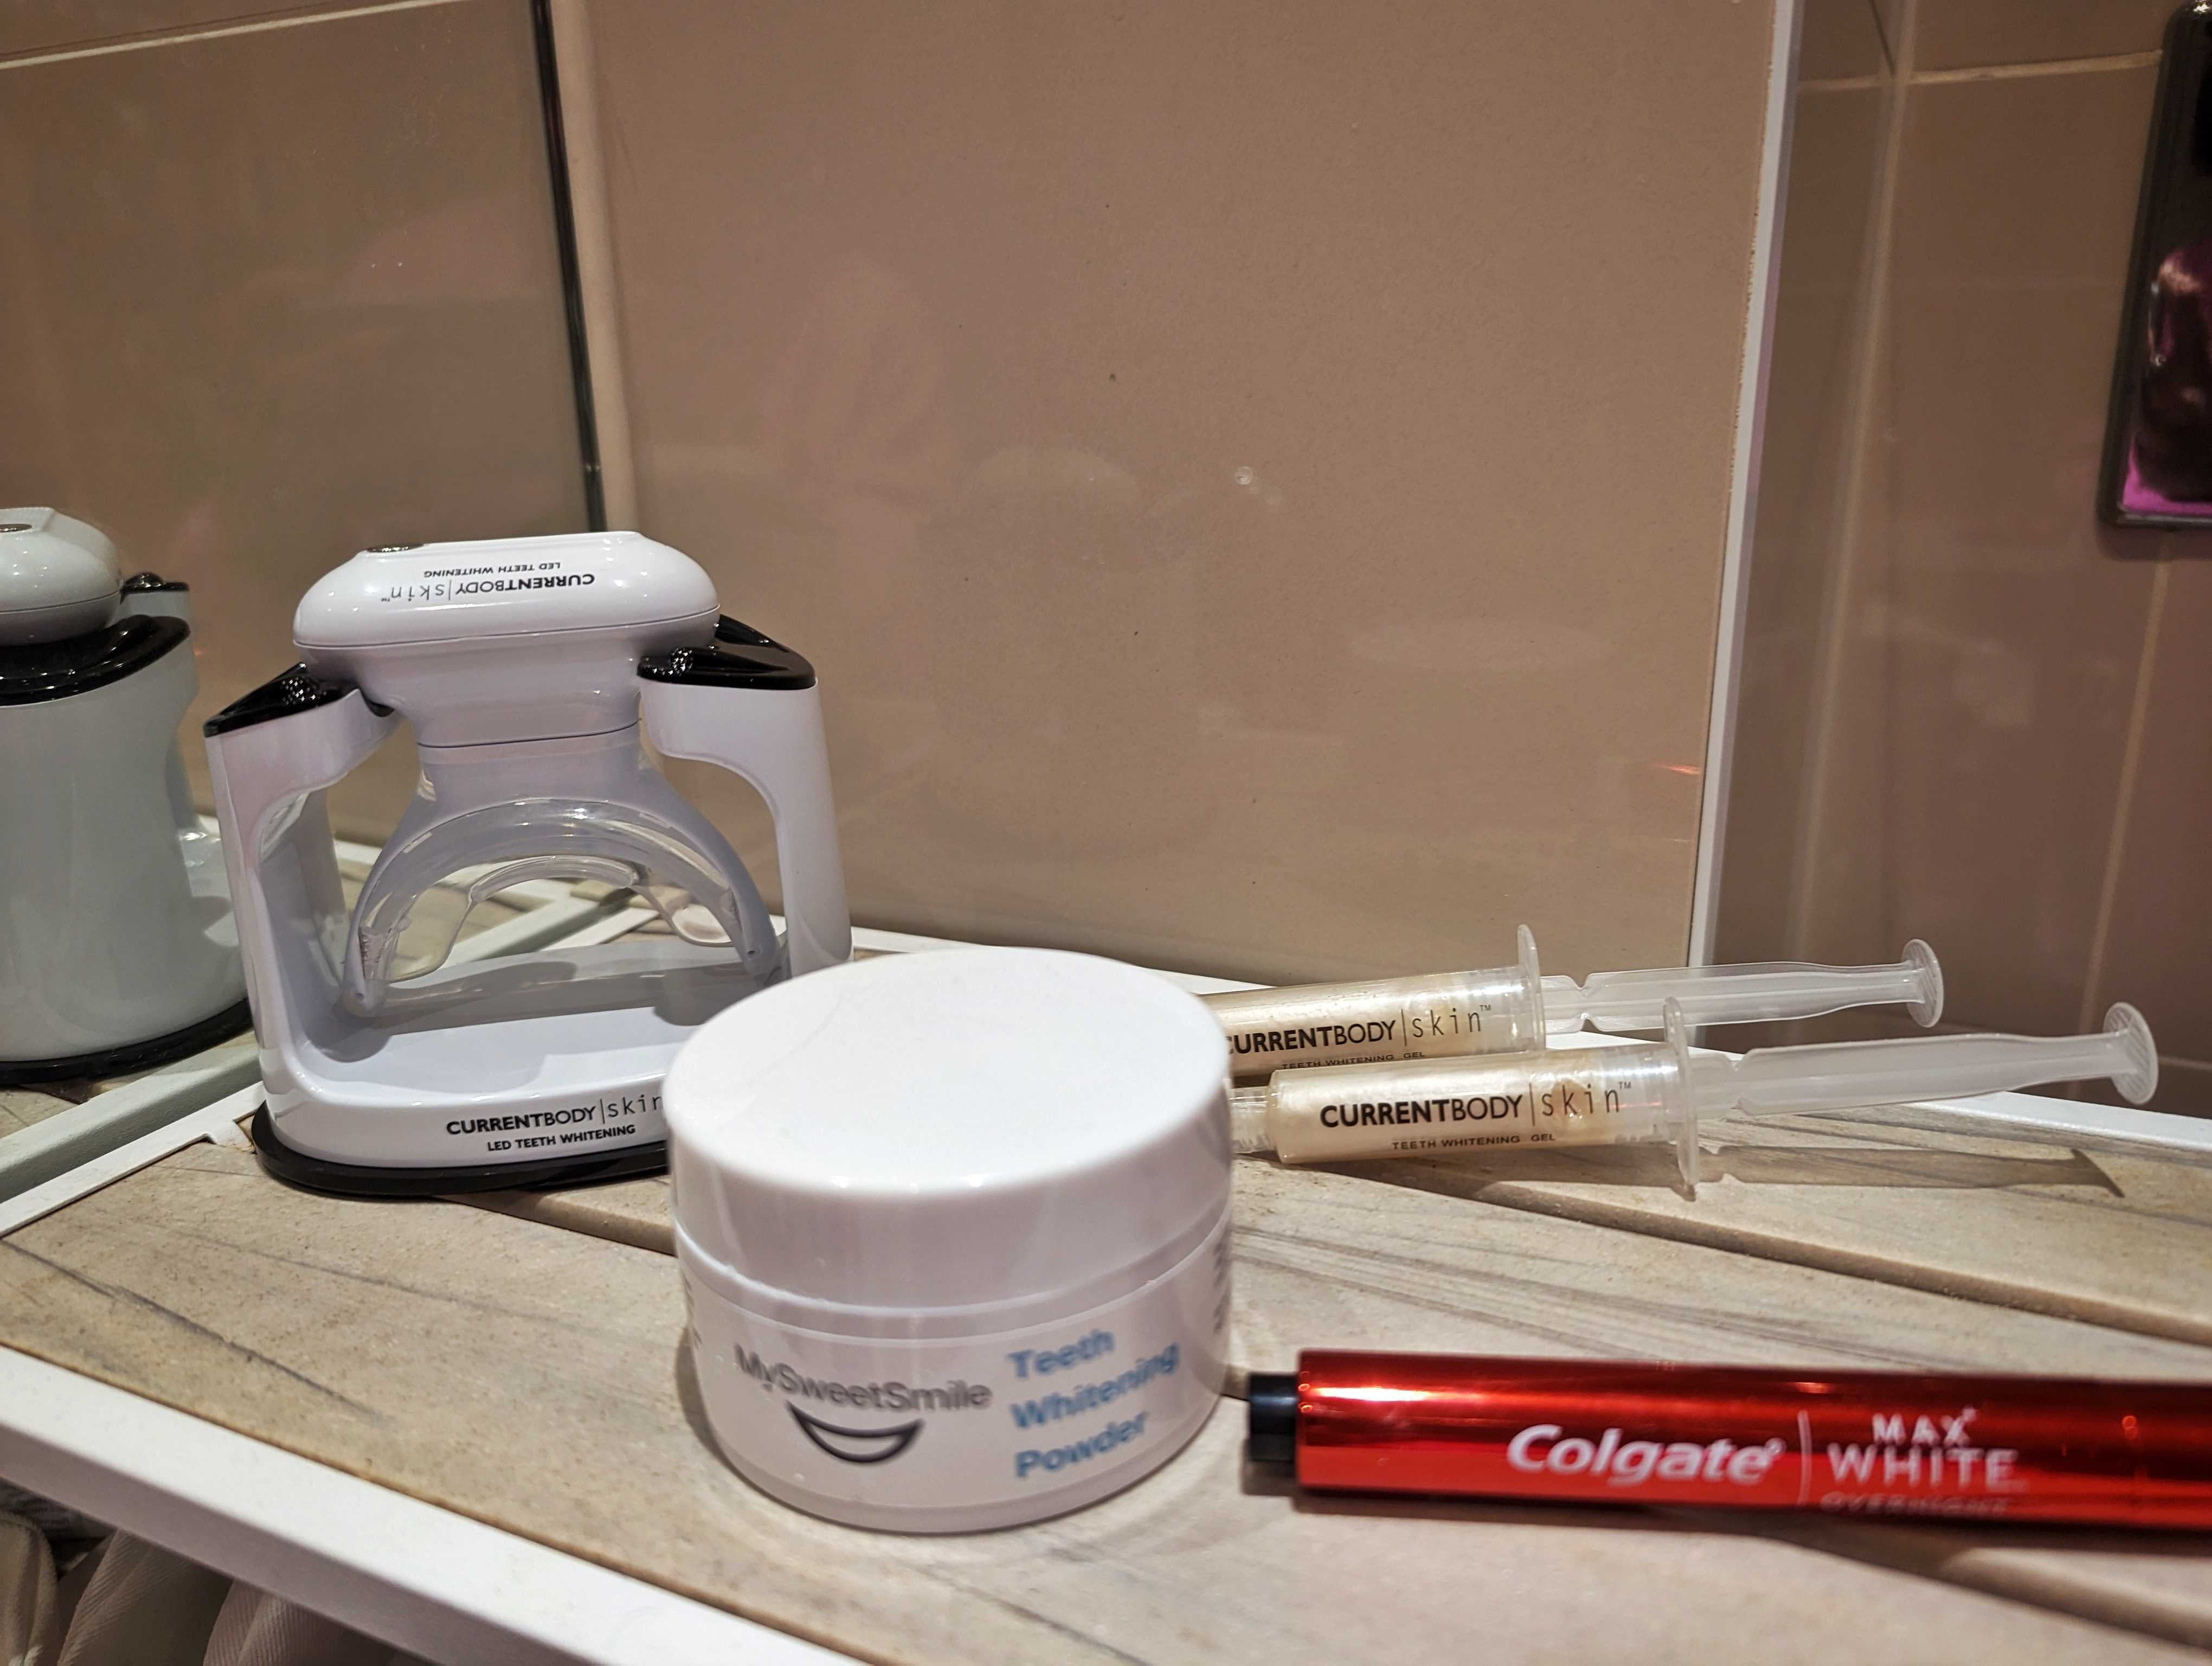 Colgate Max White Ultimate at Home LED Teeth whitening kit